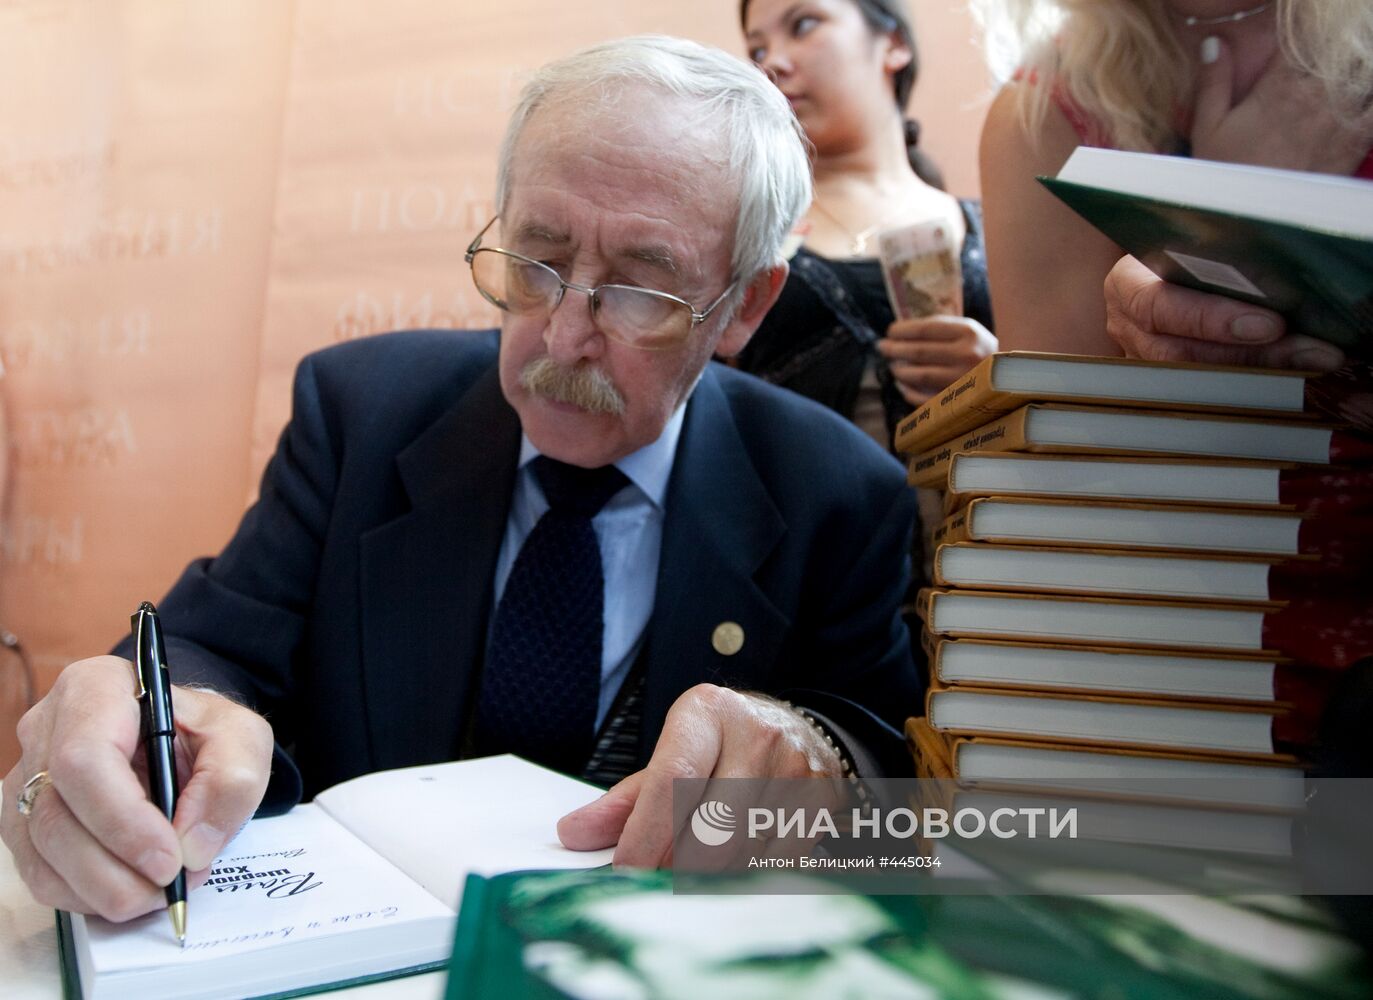 Международная книжная выставка-ярмарка открылась в Москве